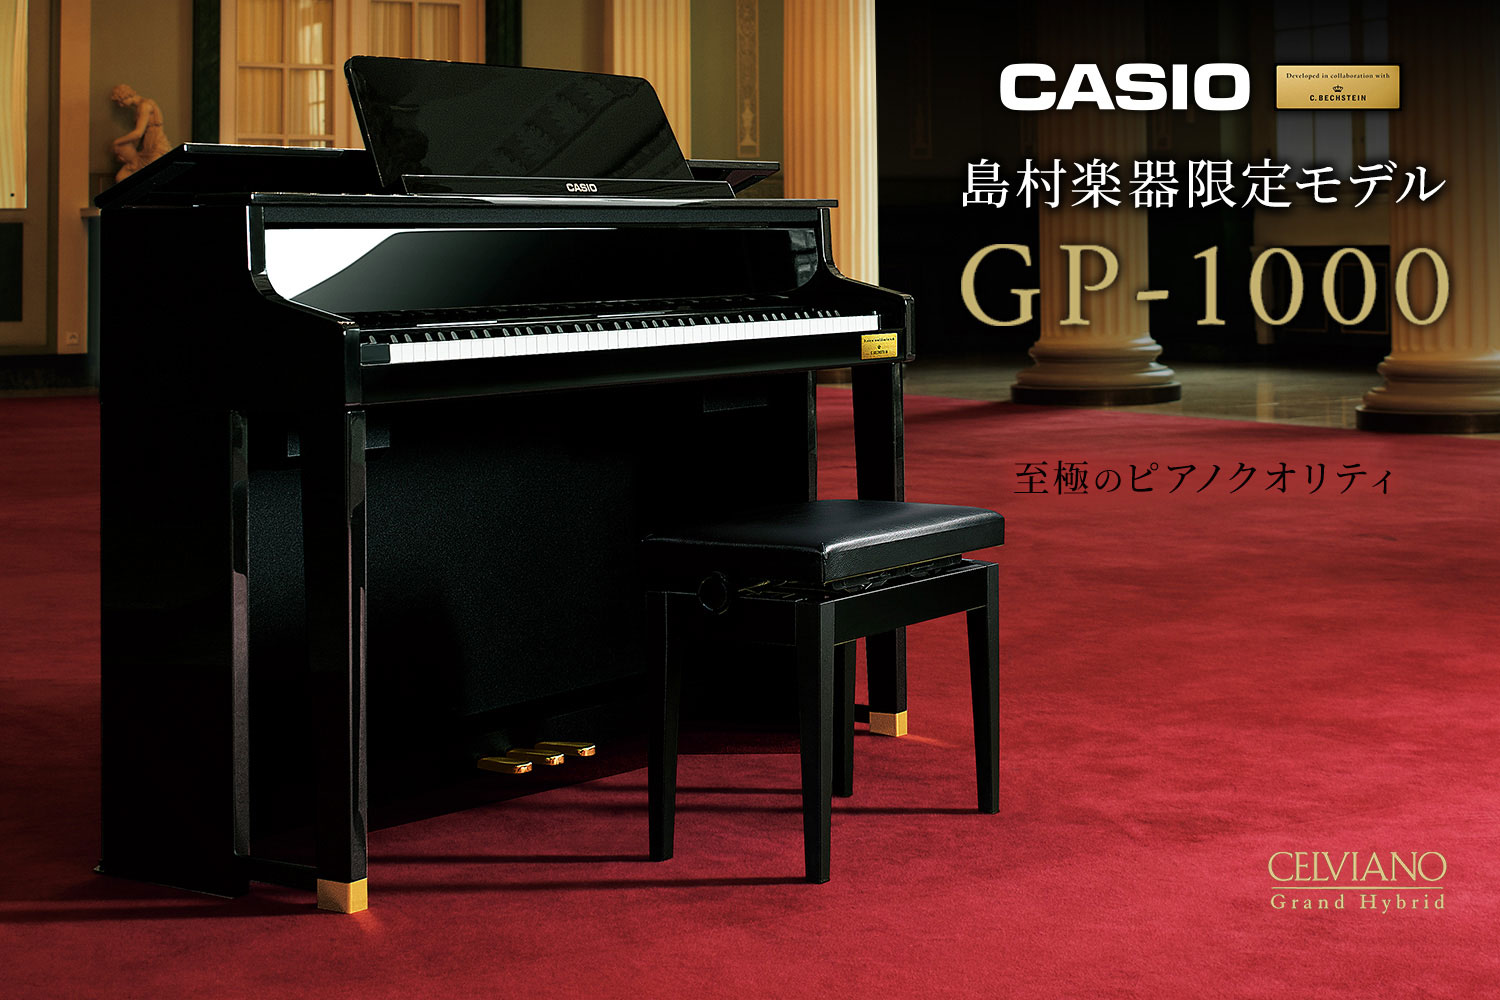 **CASIO×C.ベヒシュタイン　コラボレーション電子ピアノの島村楽器限定モデル「GP-1000」 |*ブランド|*型番|*販売価格(税込)| |CASIO|GP-1000|[!￥412,500!]| シリーズ最上位モデルであるGP-510をベースに楽器専門店としてのノウハウやお客様のご要望にお応 […]